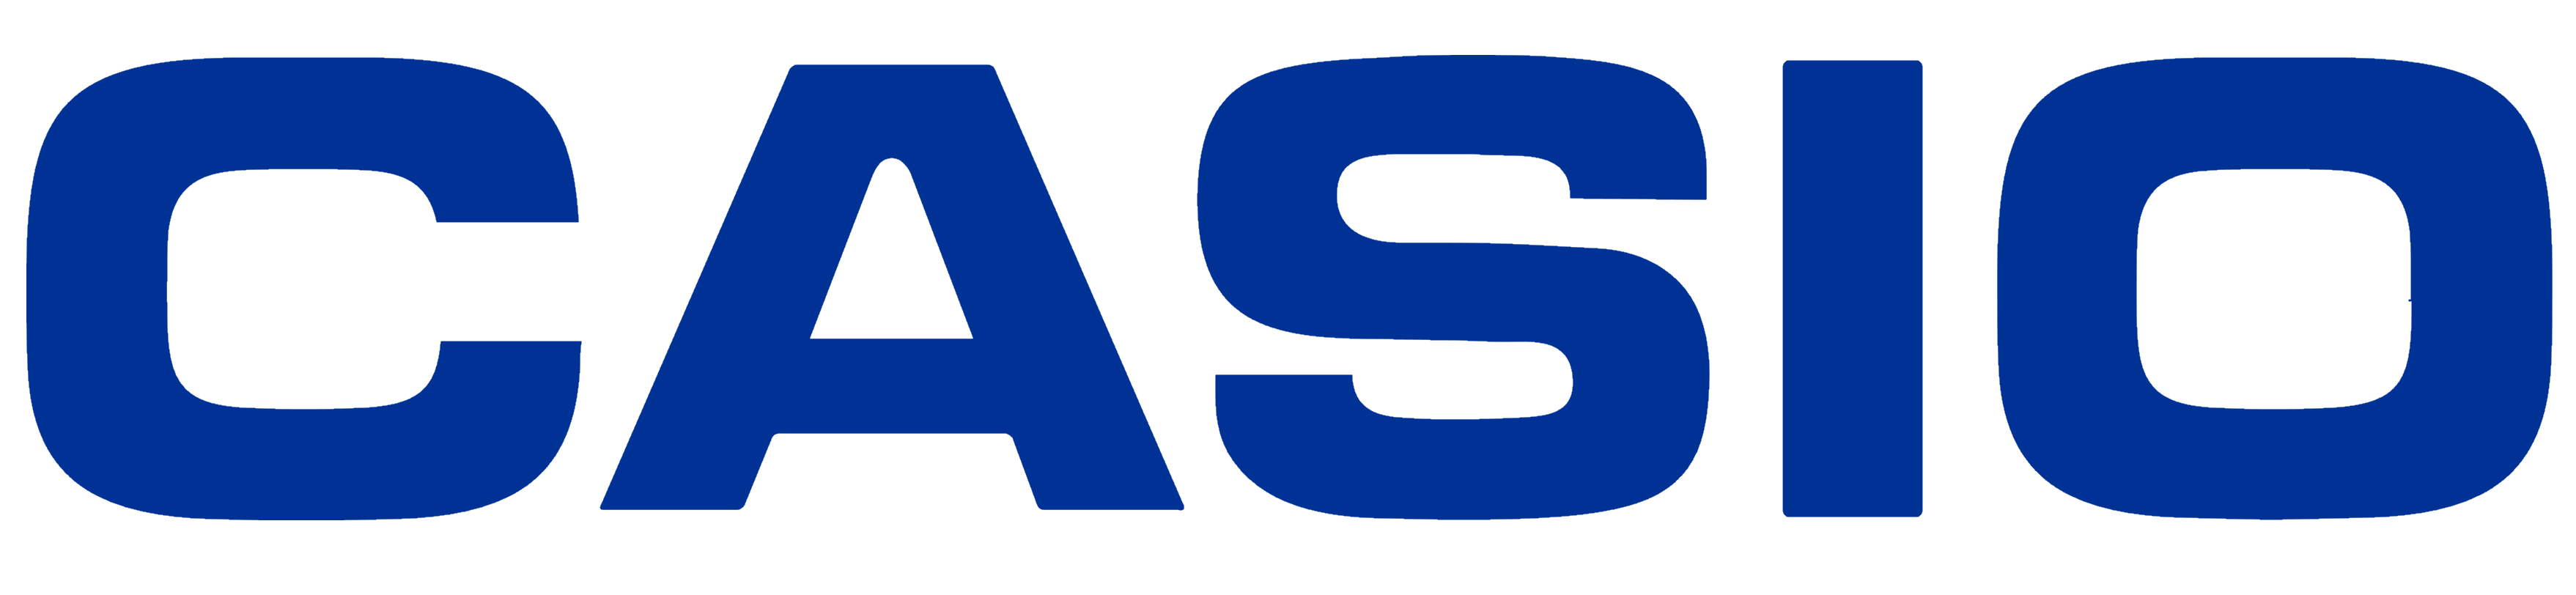 Casio Logo PNG - 177058